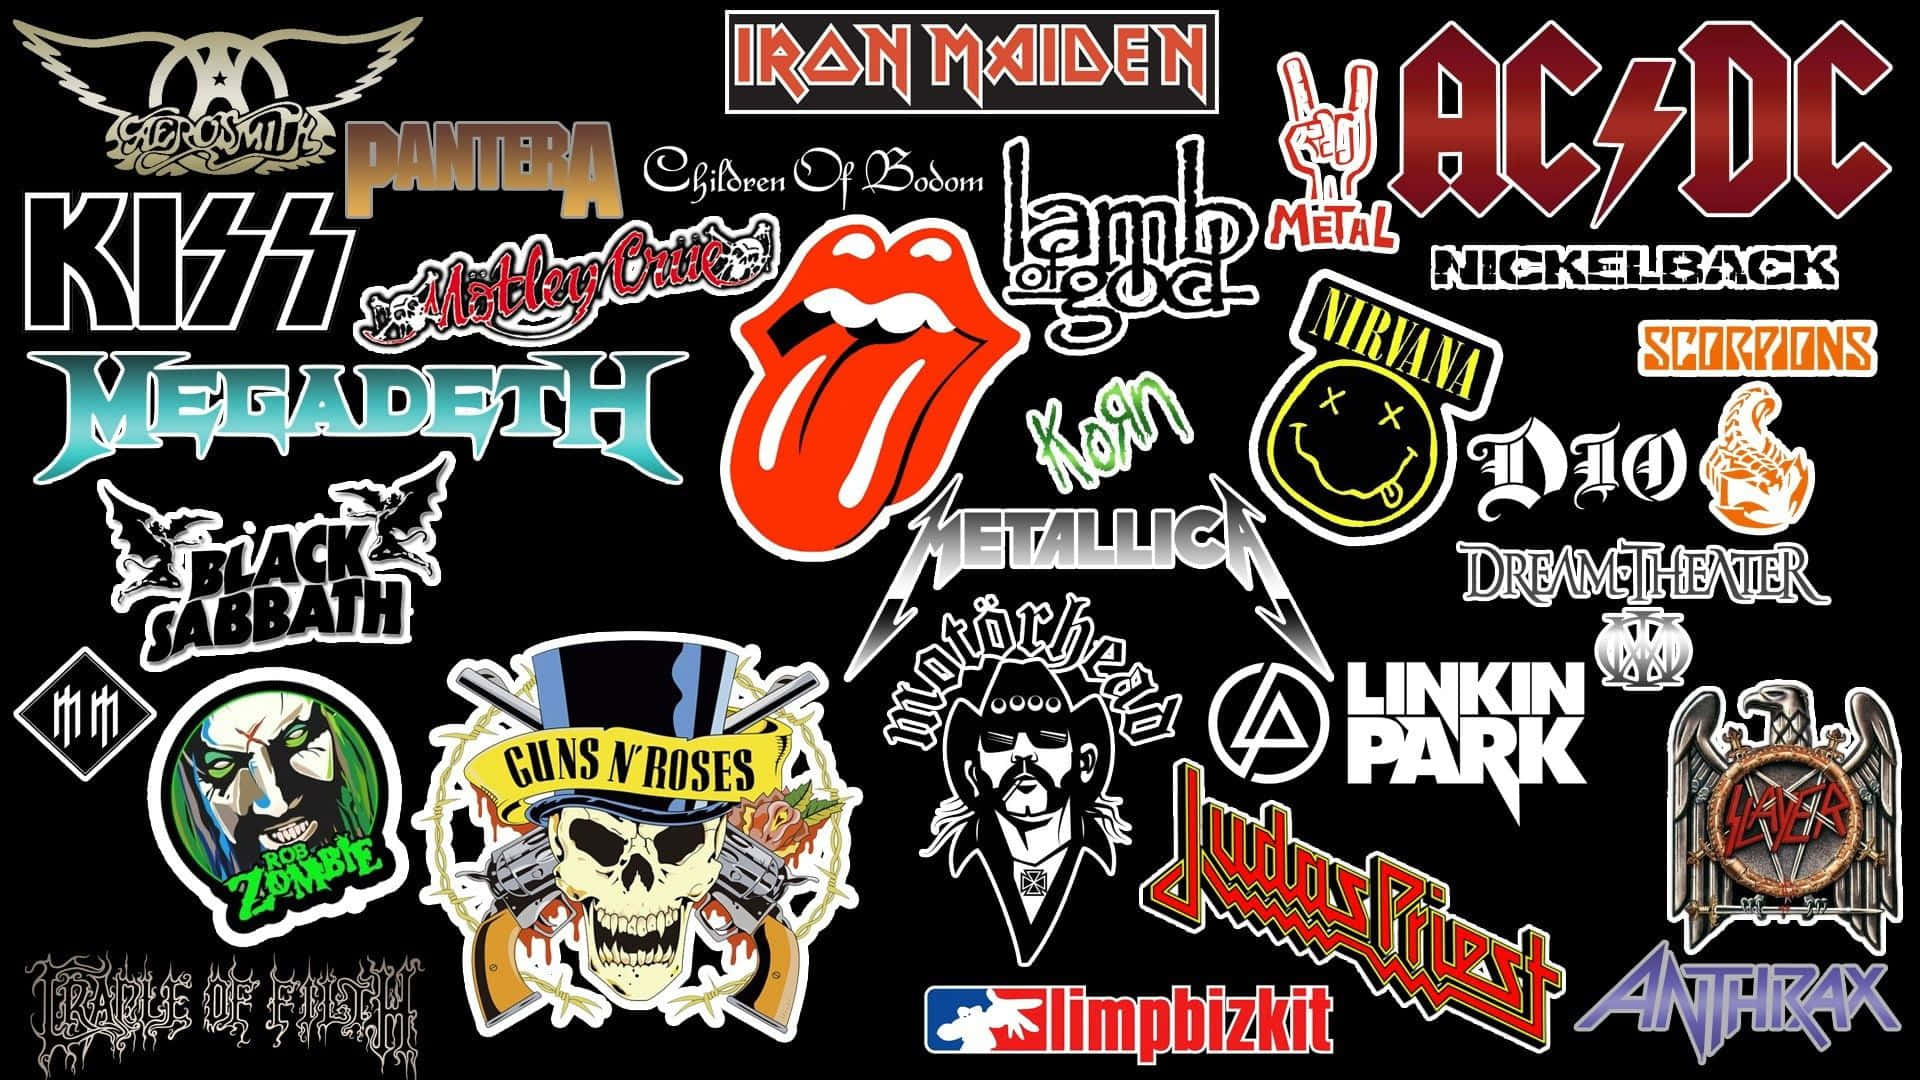 "It's All About Rock n Roll" Wallpaper